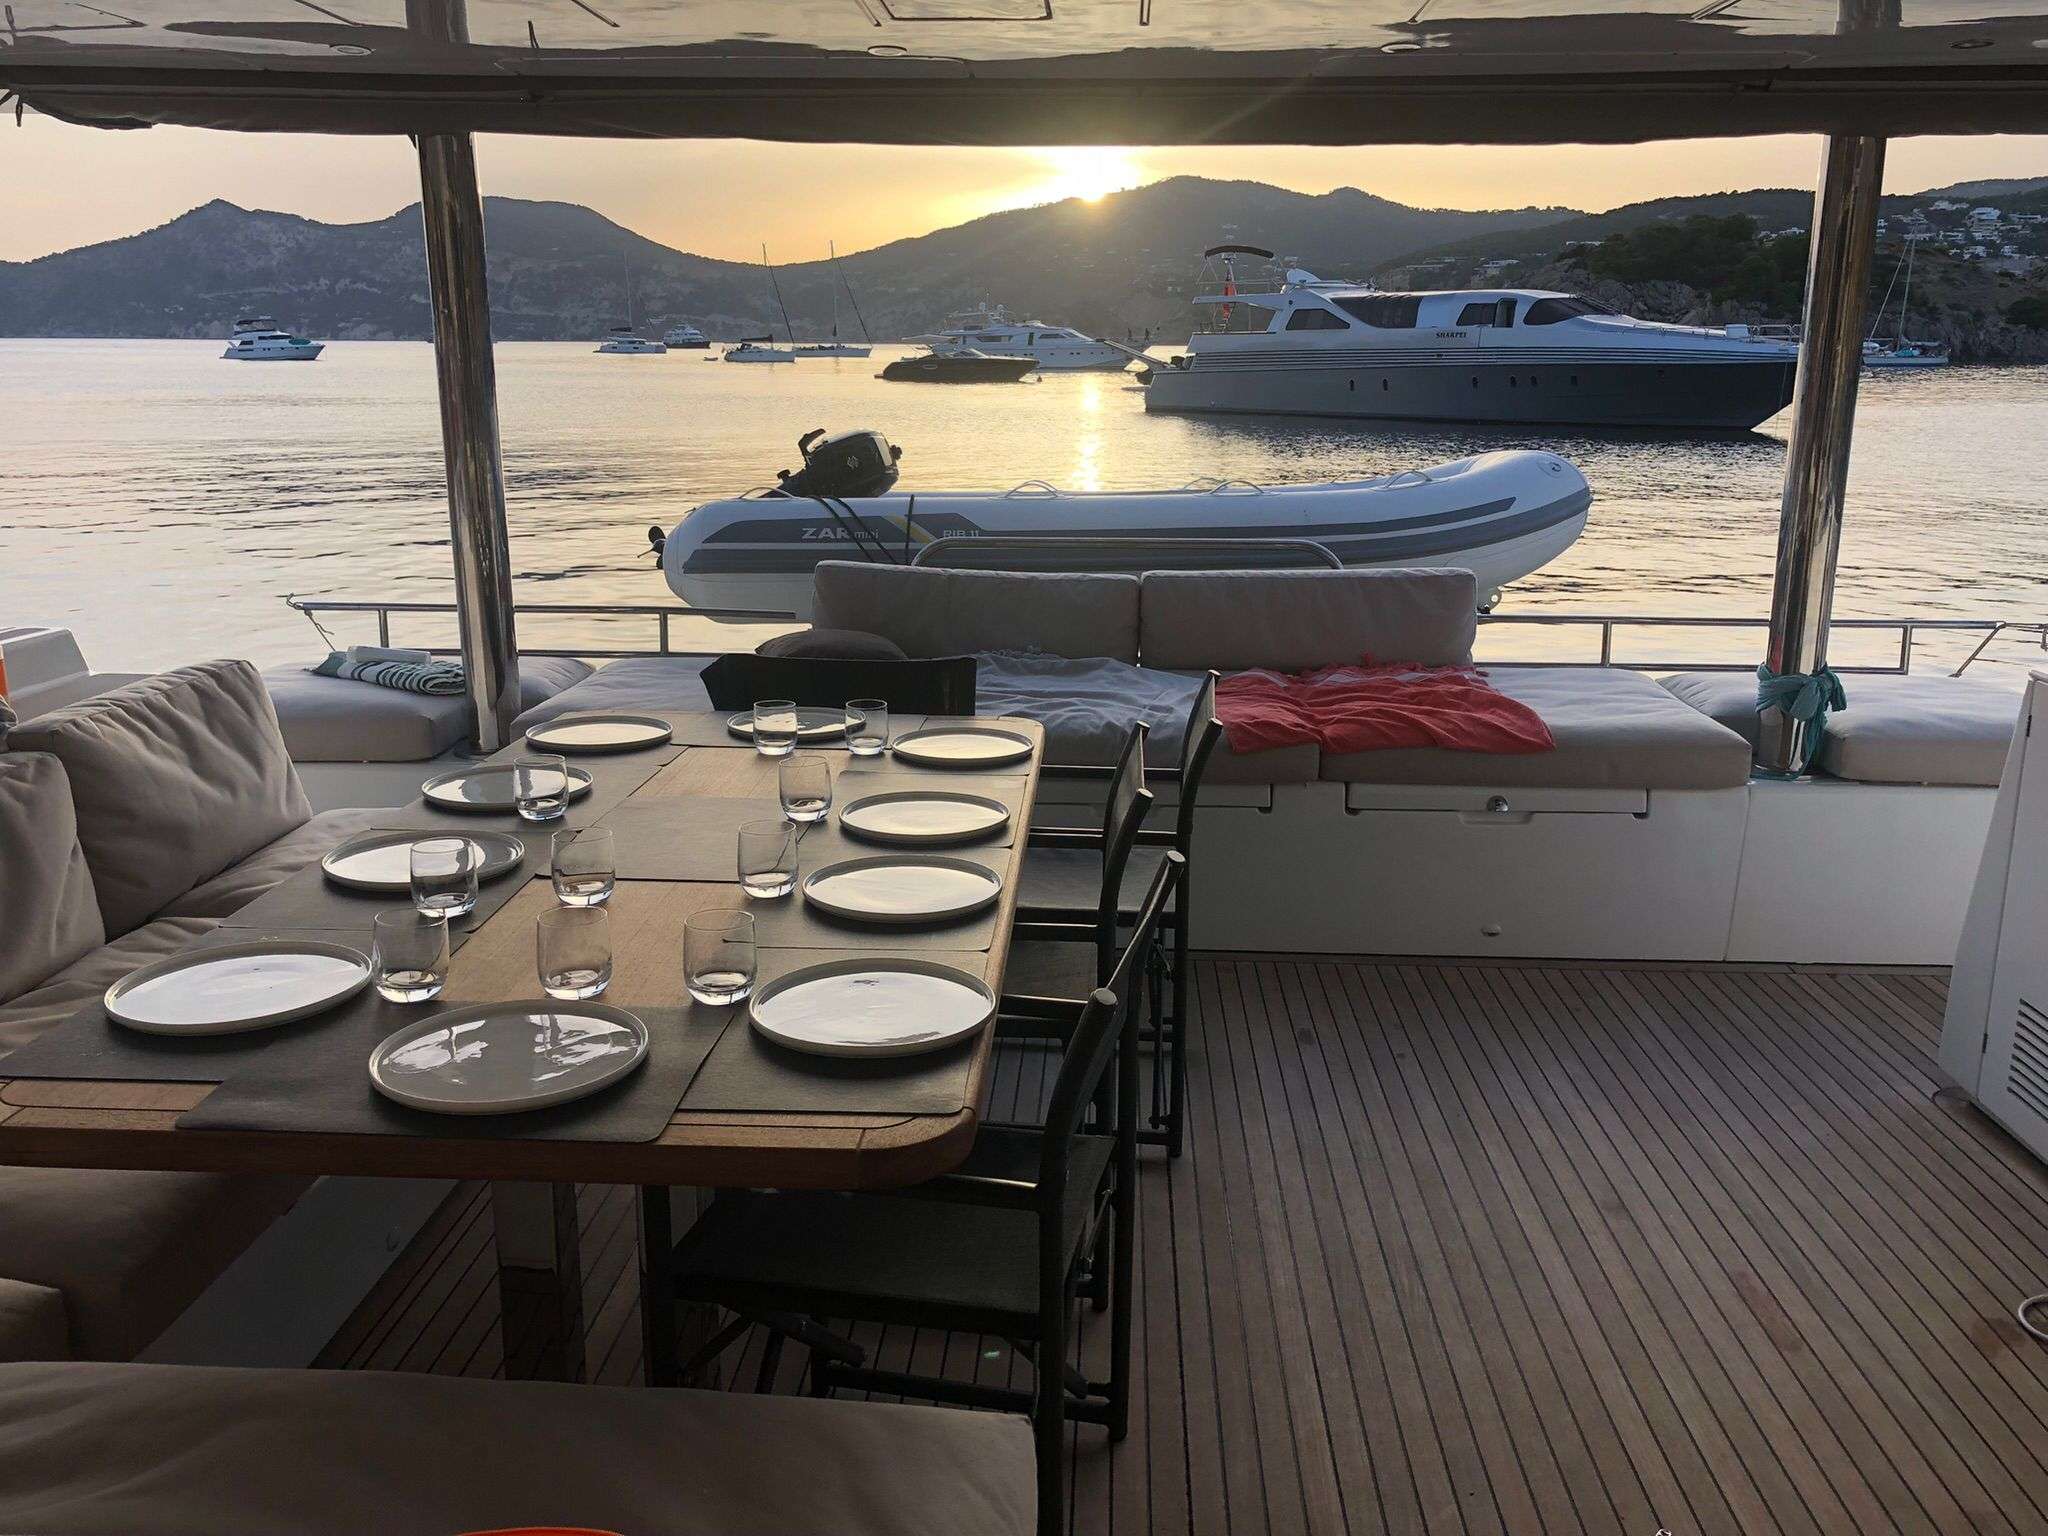 ISLAS CHAFARINAS Yacht Charter - Aft dining area